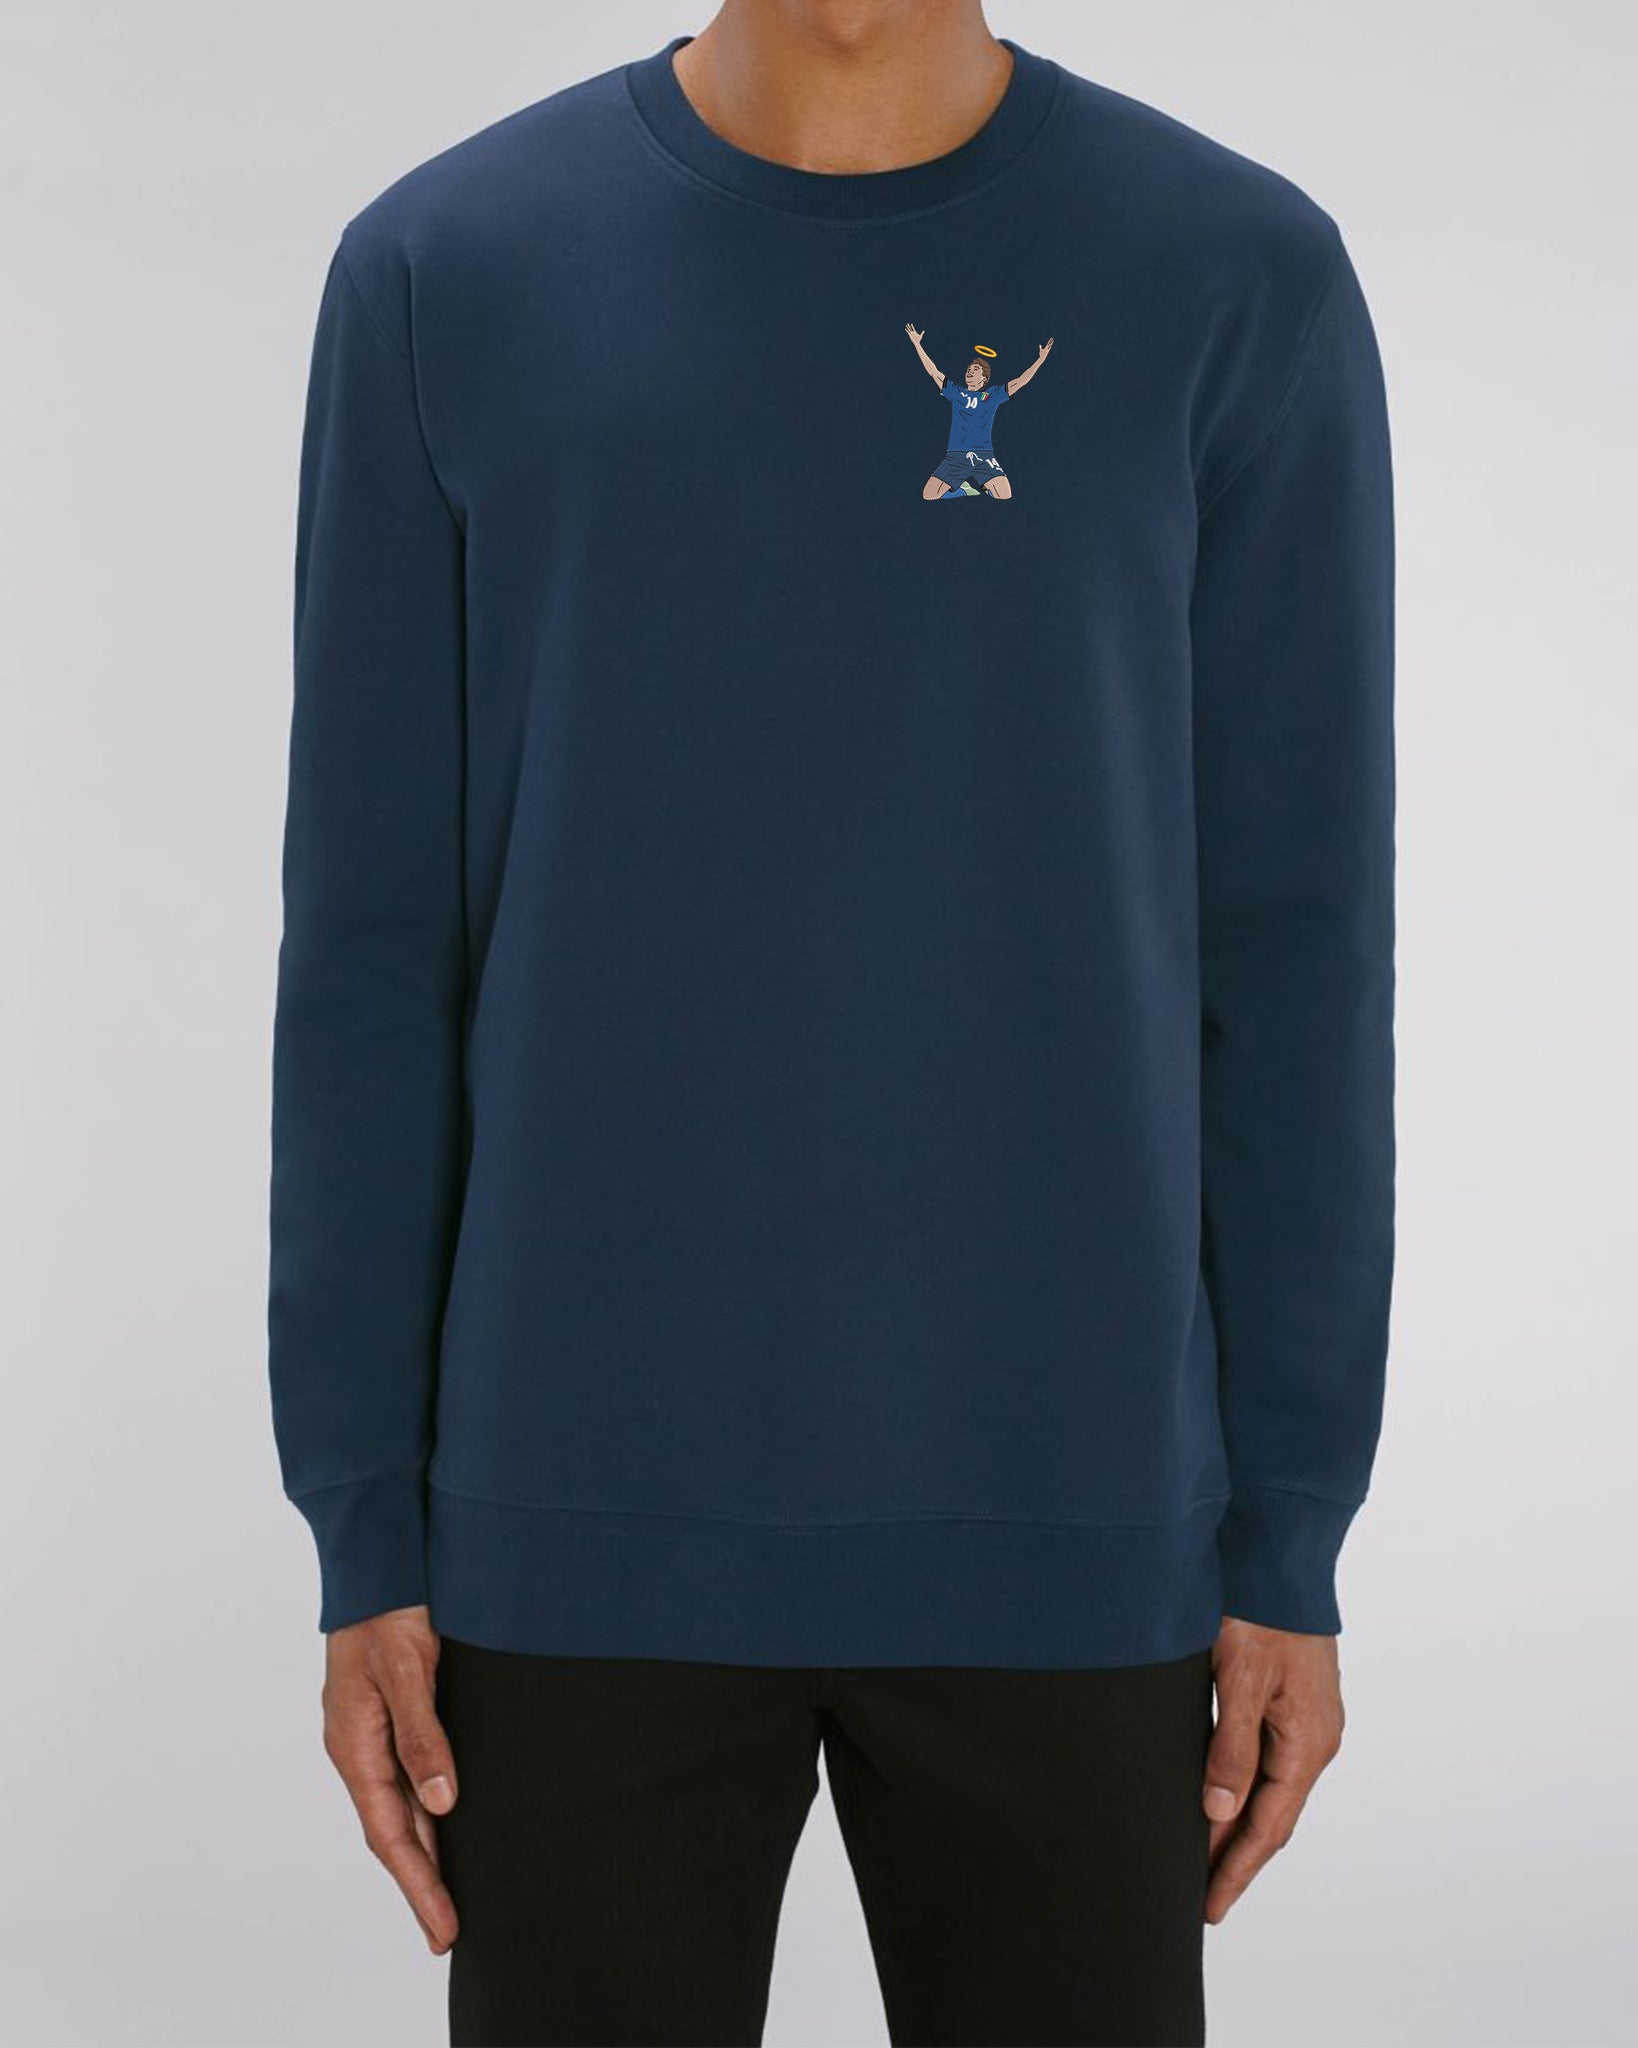 Embroidered fede in fede sweatshirt